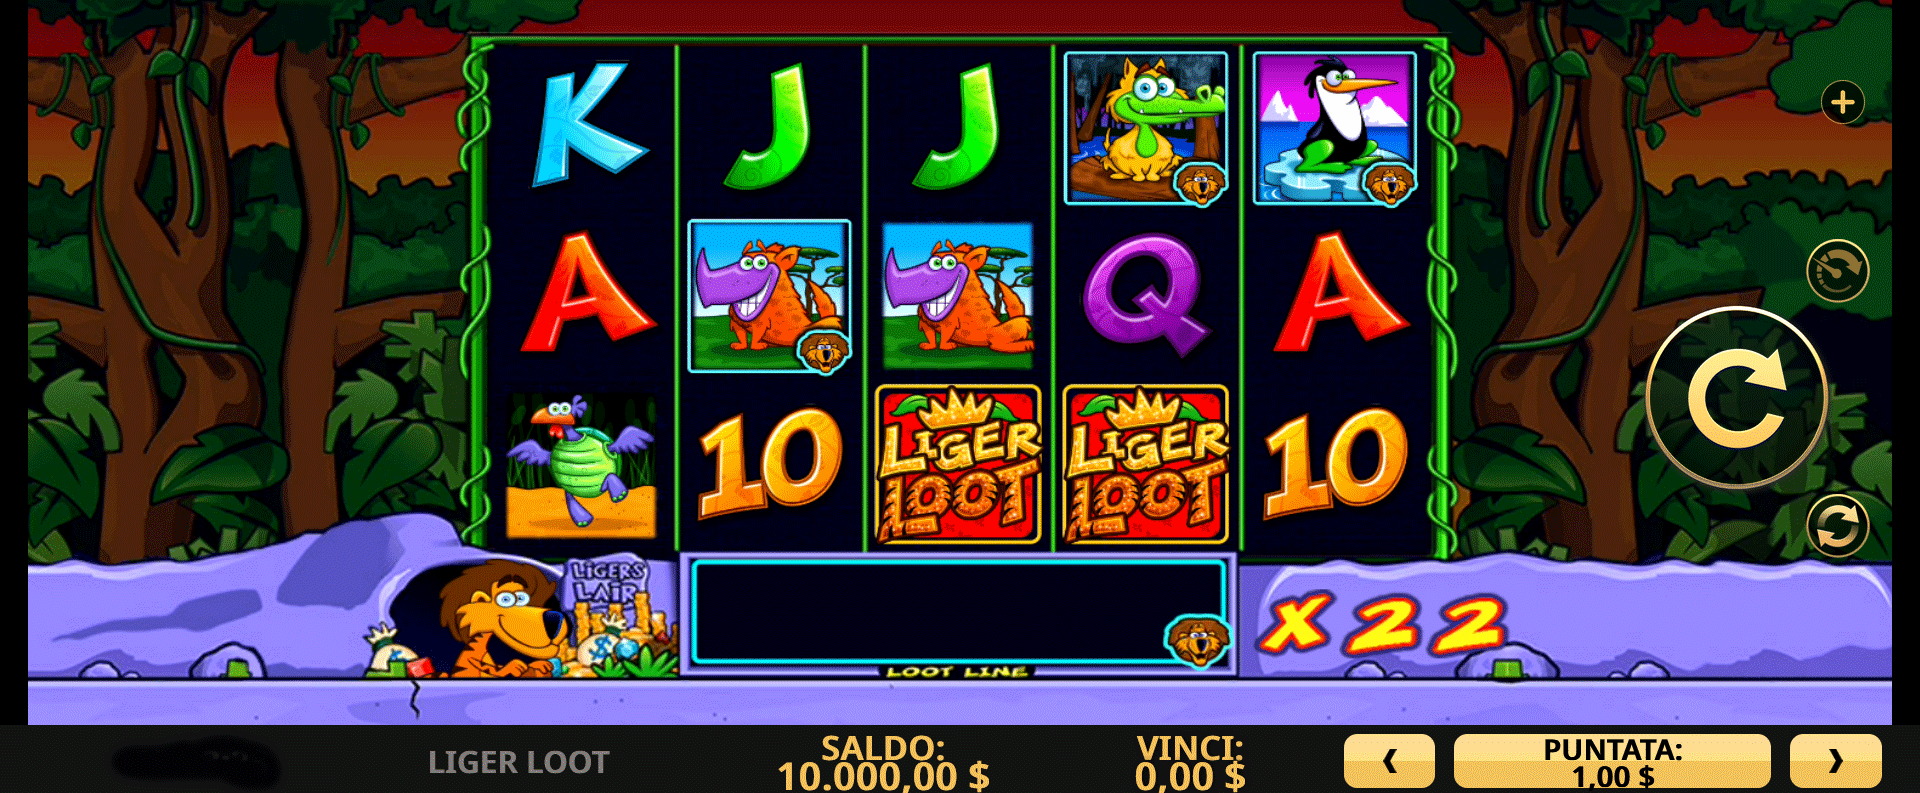 schermata del gioco slot online liger loot